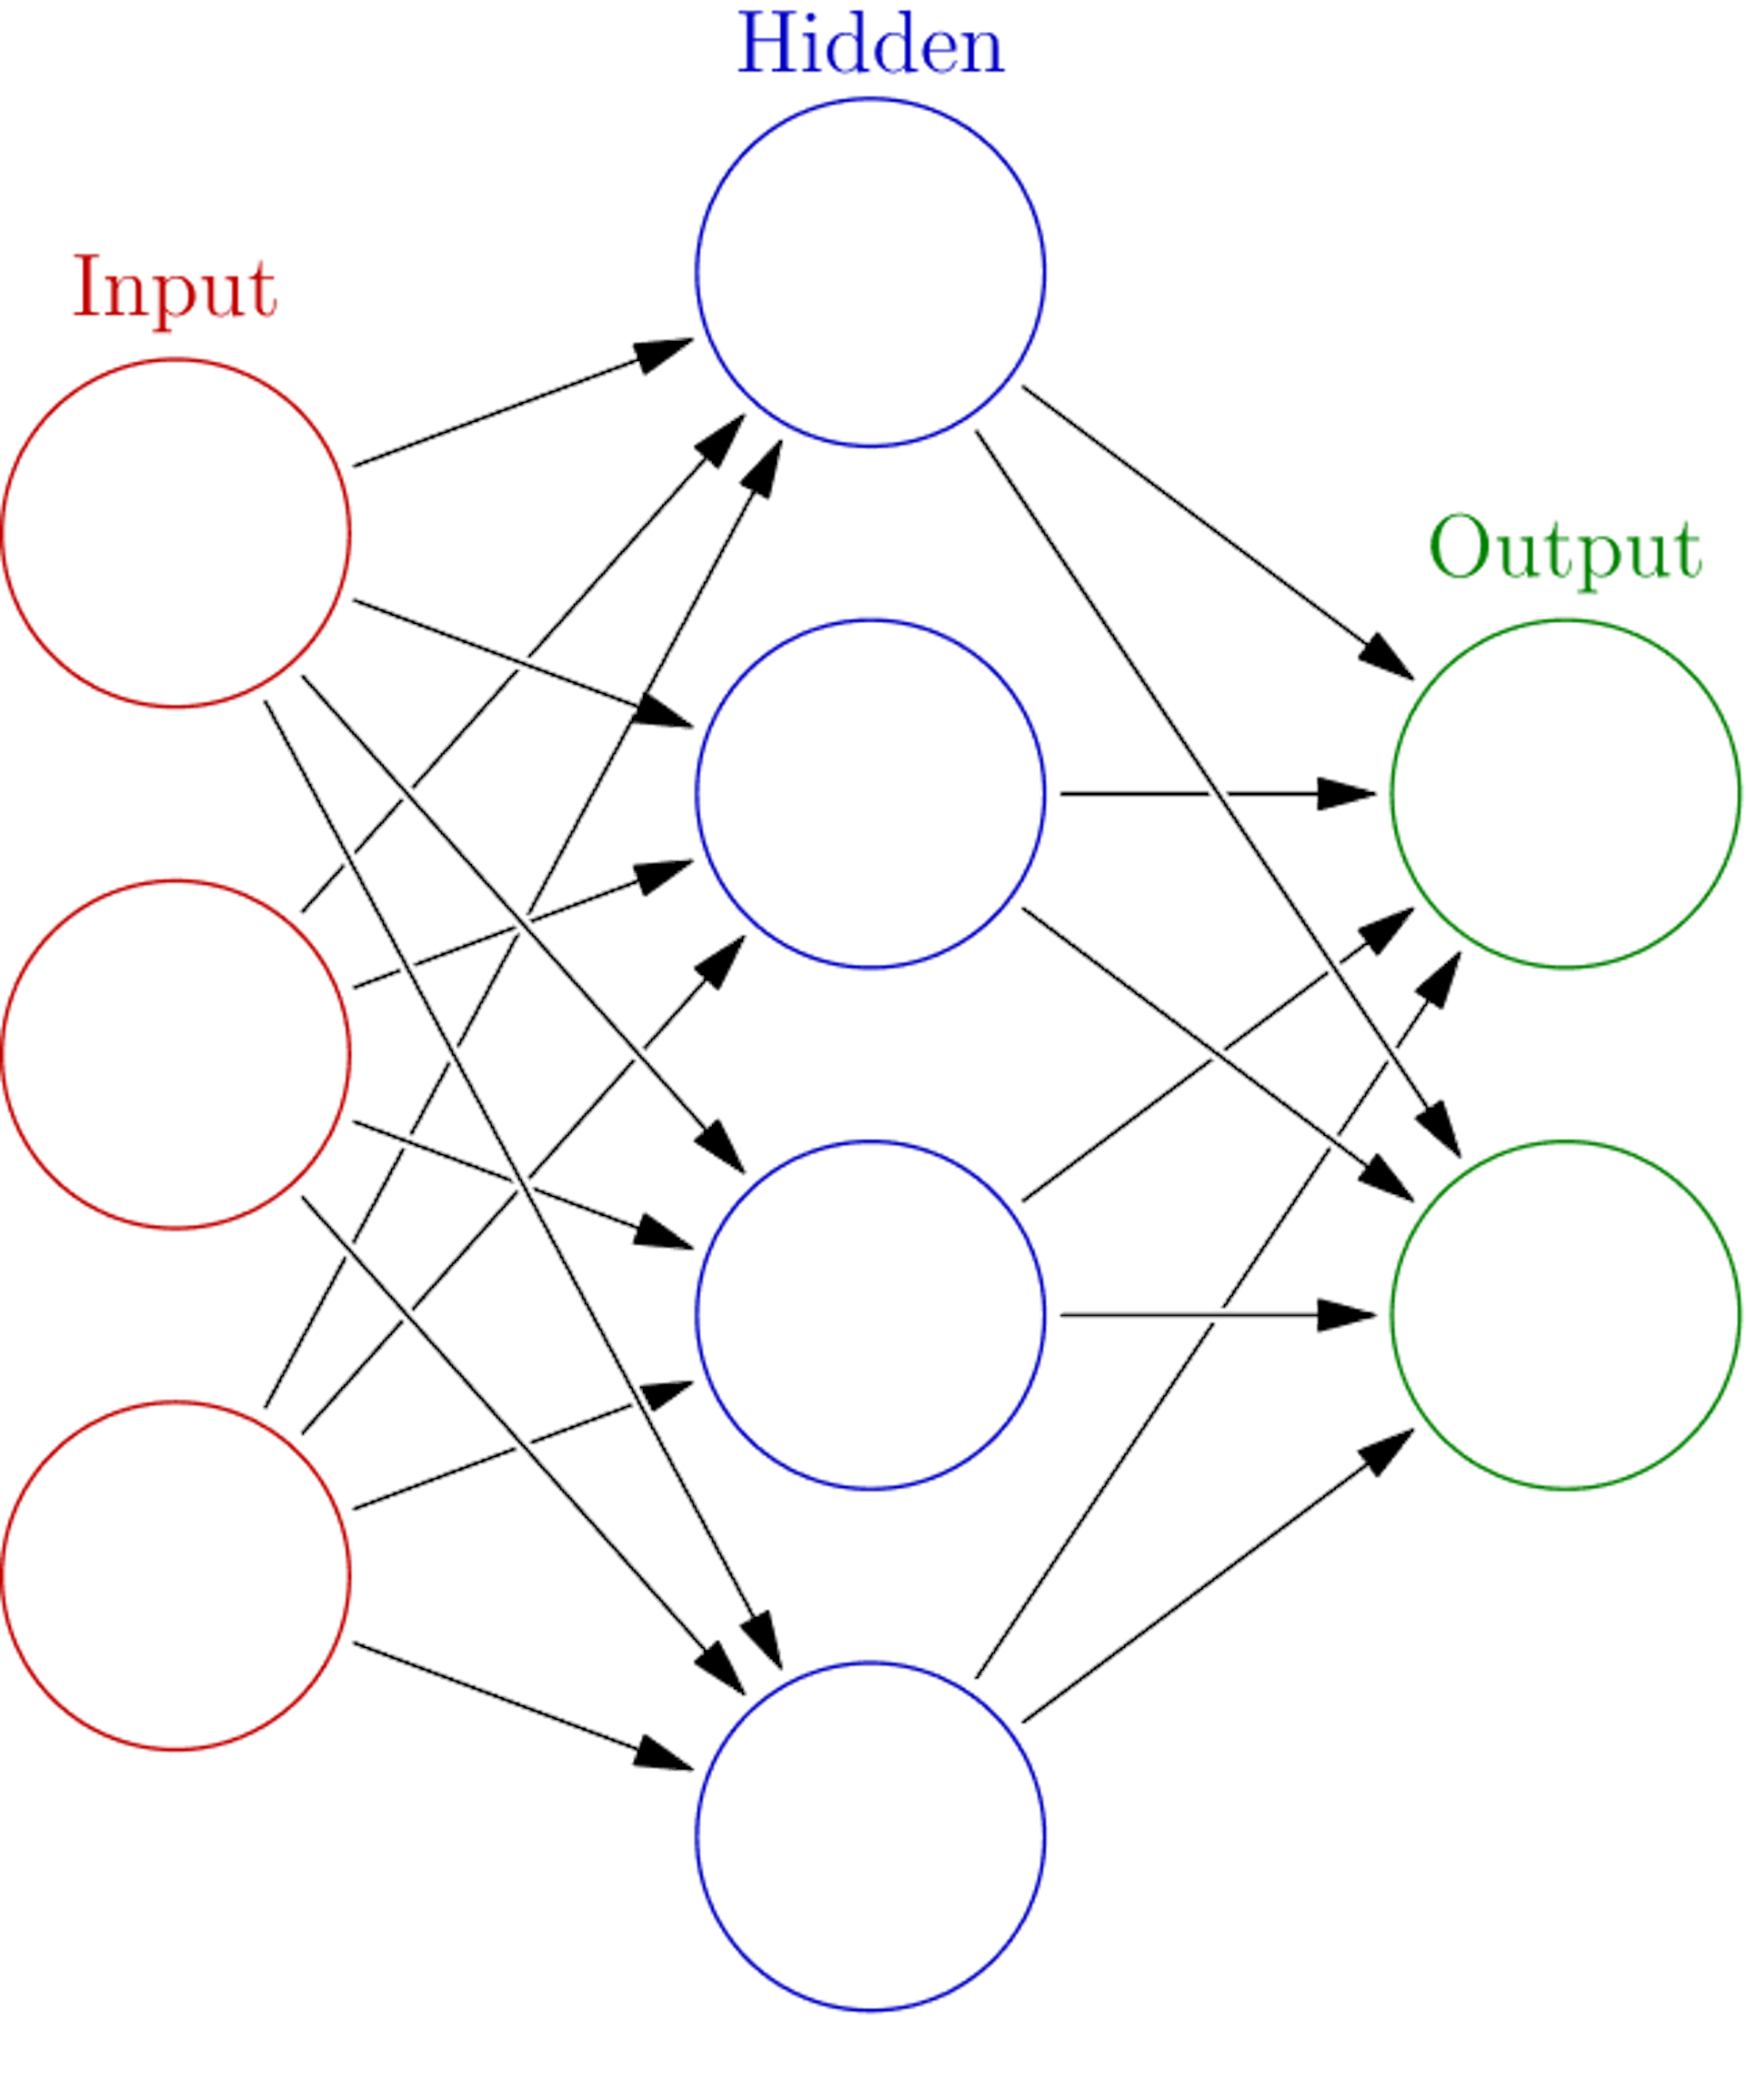 Apresentação básica de como funciona a rede neural (original: https://en.wikipedia.org/wiki/Neural_network_(machine_learning)#/media/File:Colored_neural_network.svg)